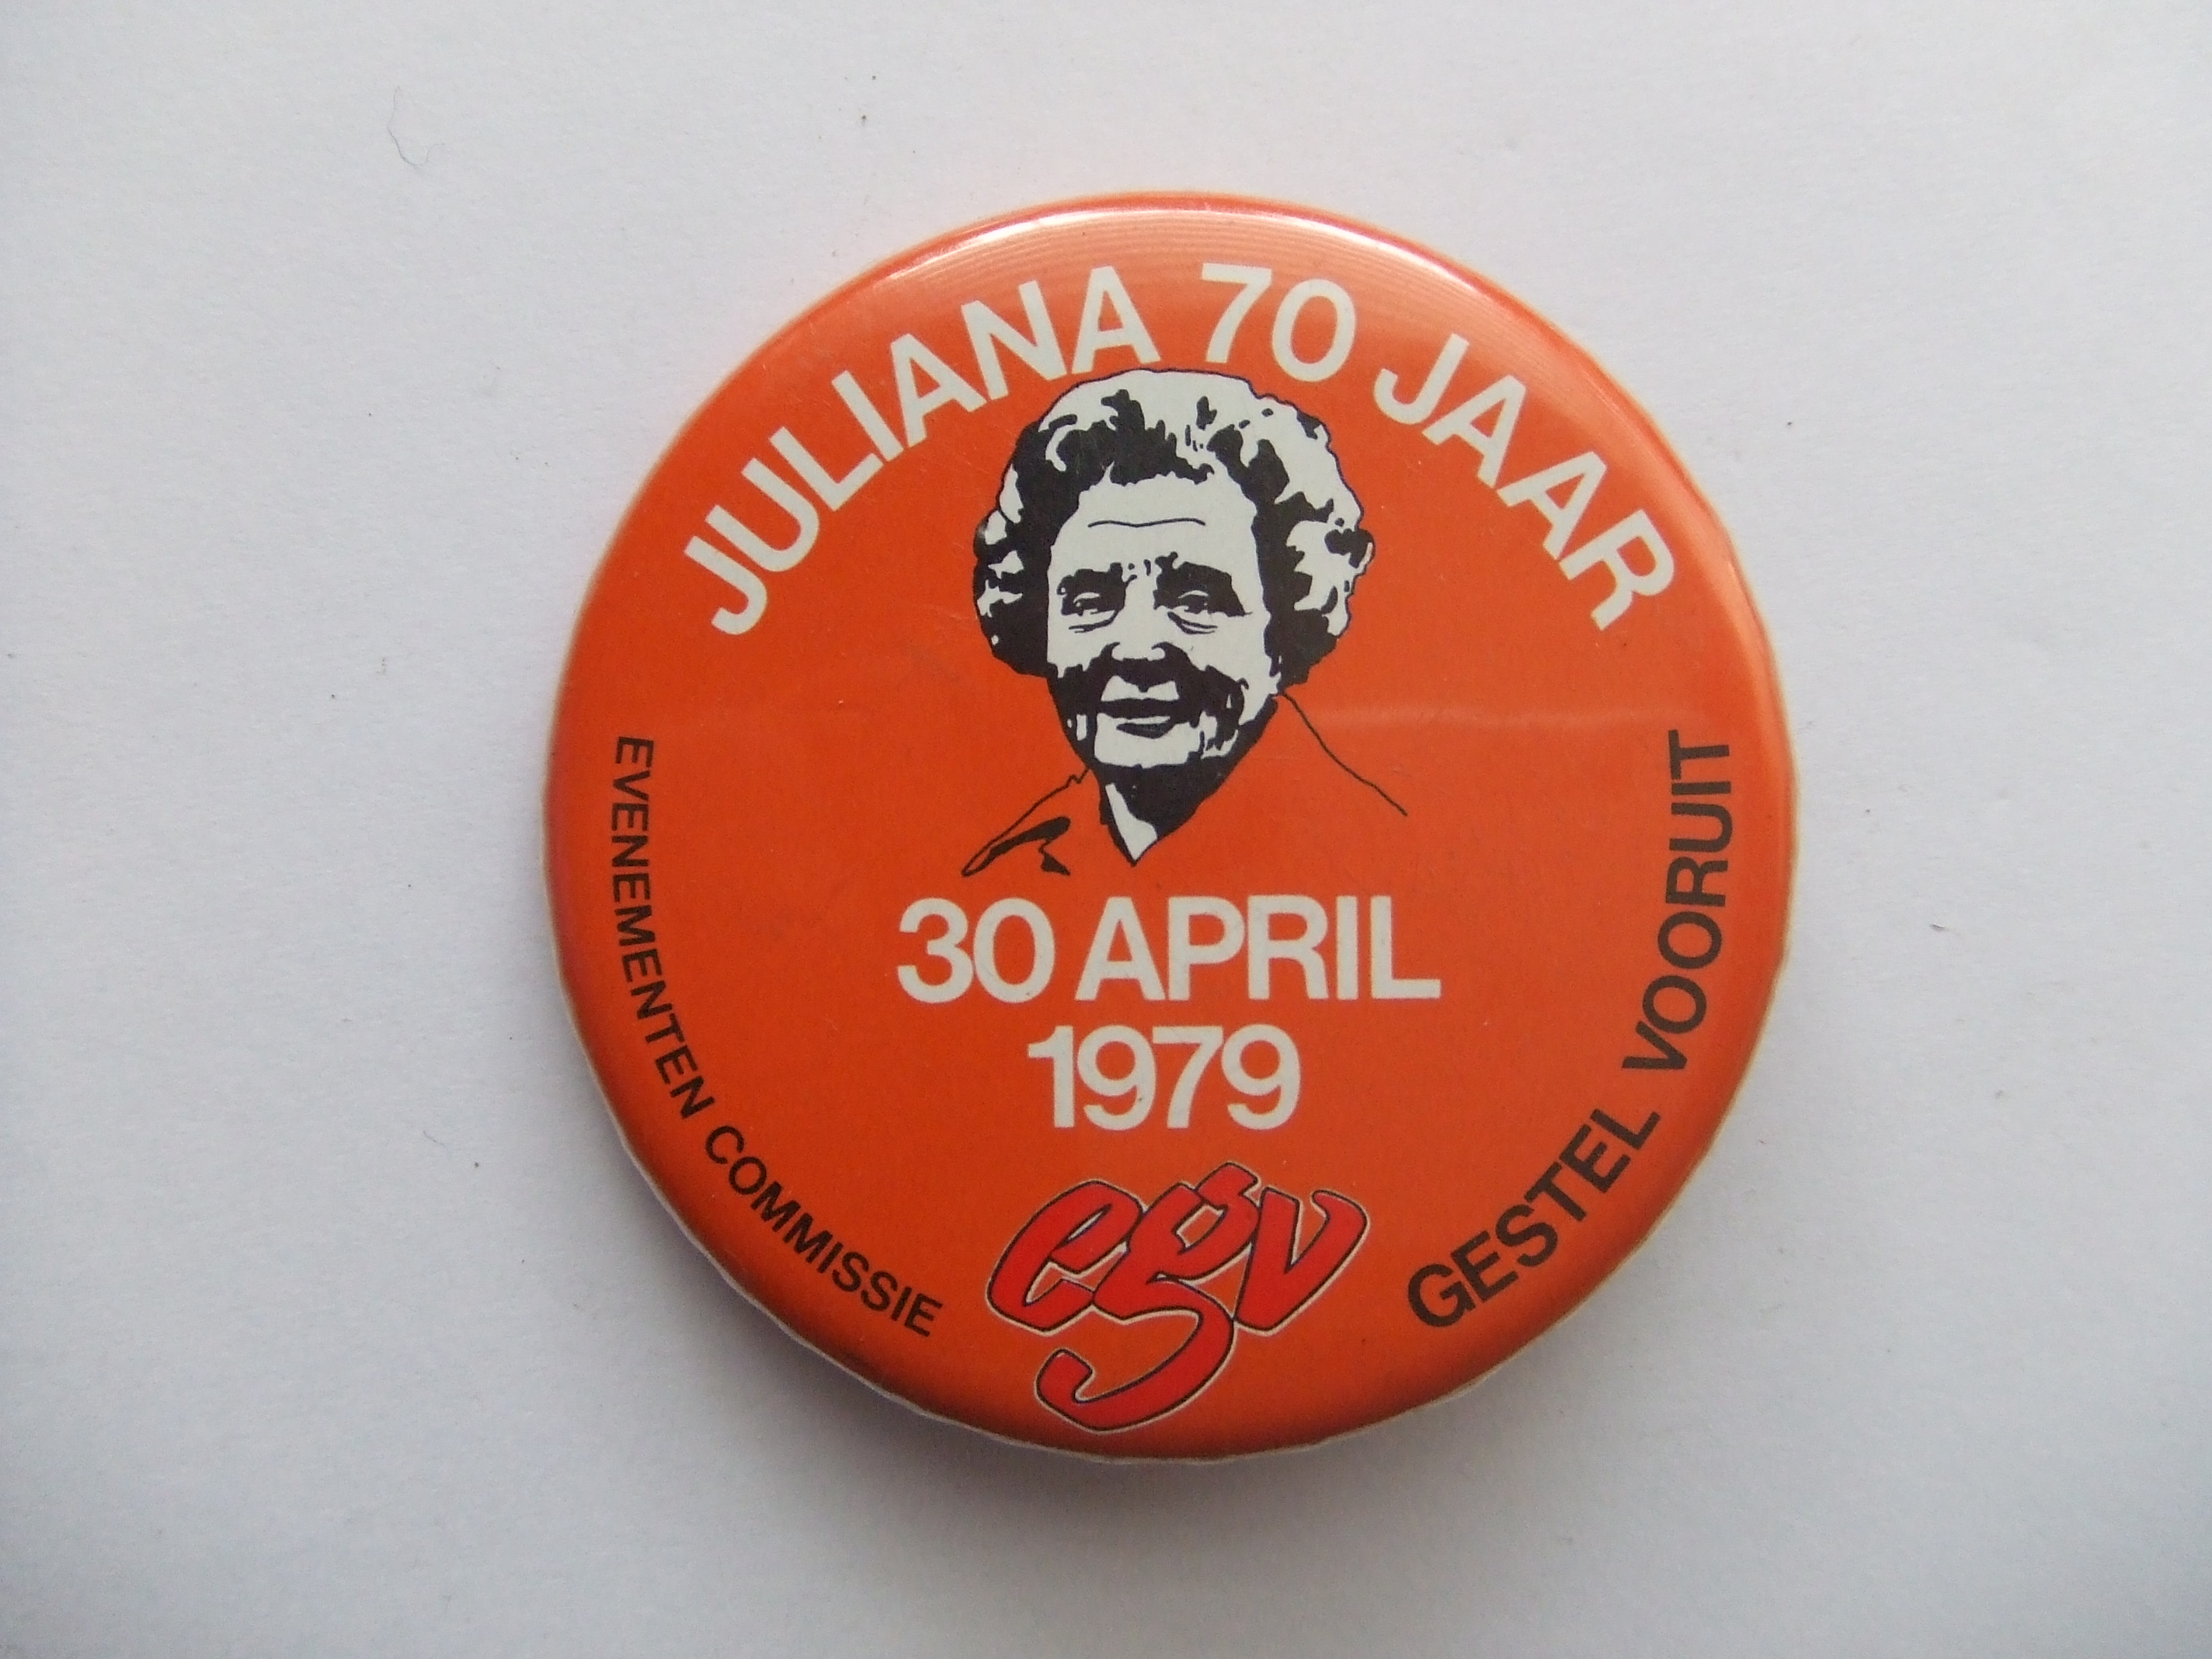 Juliana 70 jaar 30 april 1979